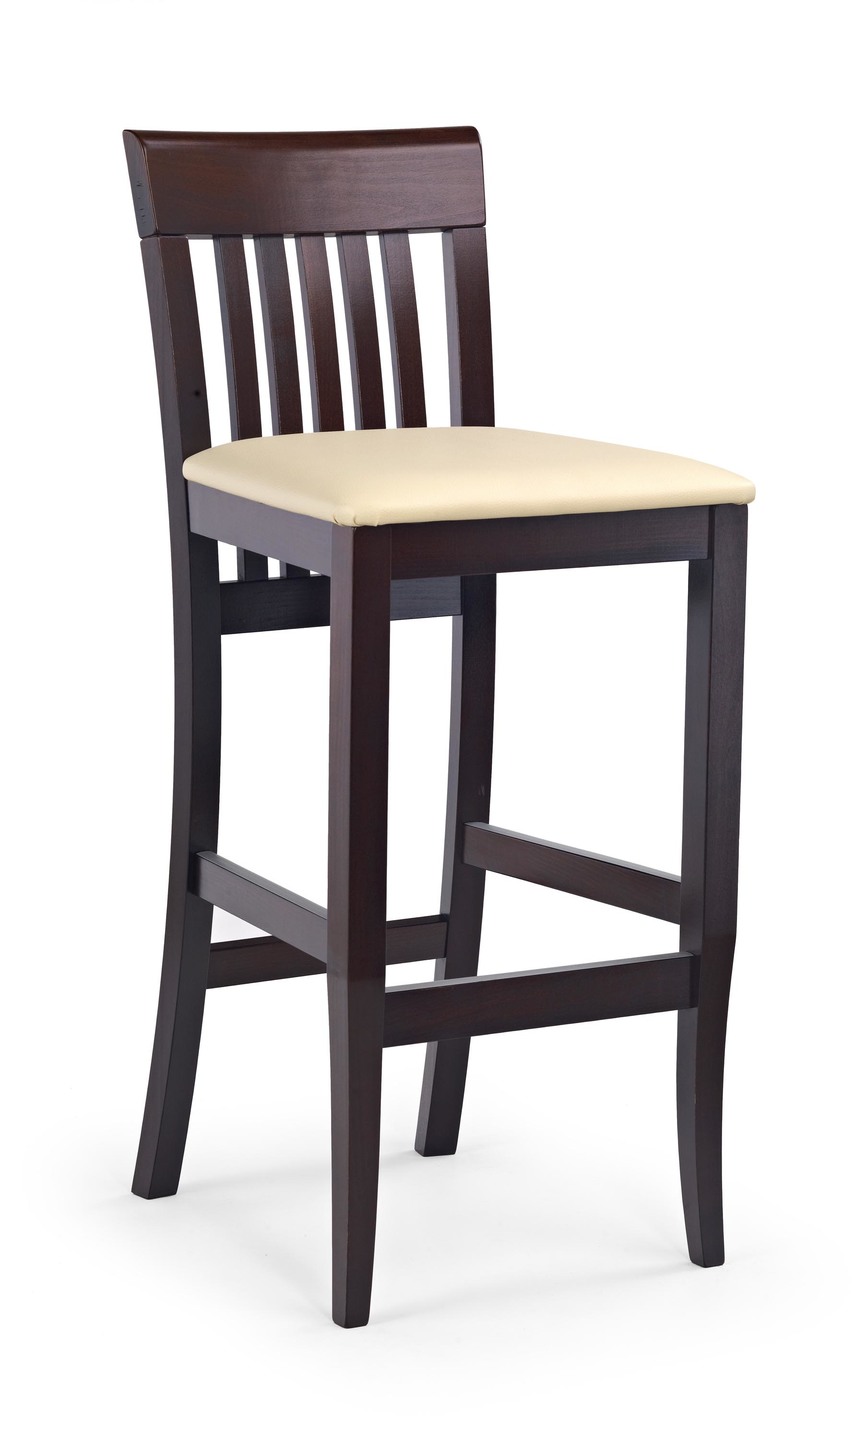 MIX bar stool color: dark walnut